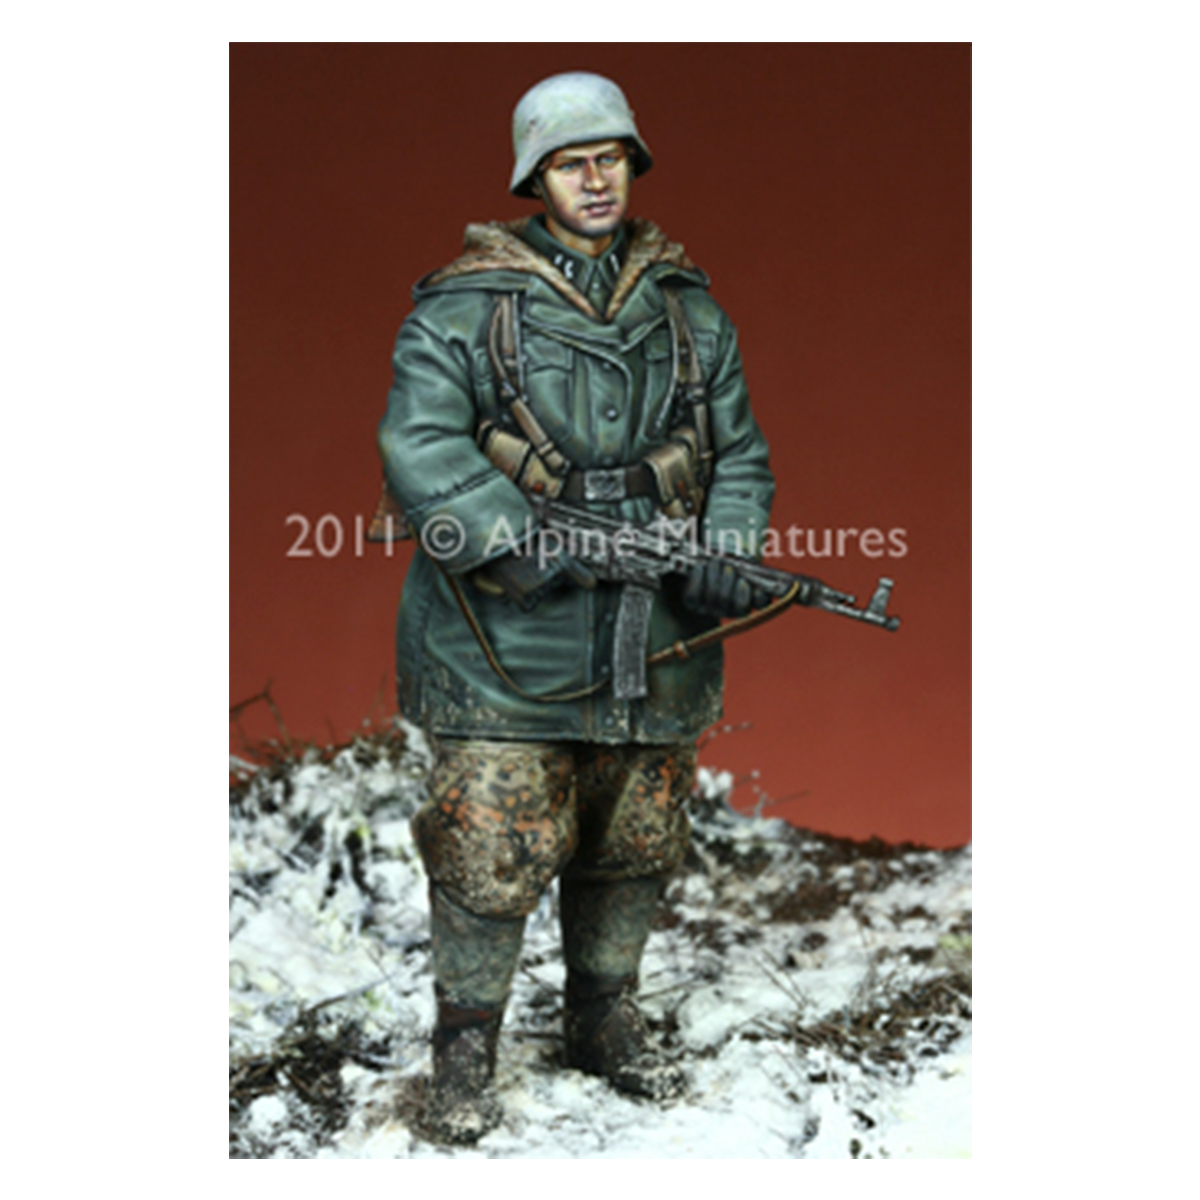 Alpine Miniatures – WSS Grenadier Late War #1 1/35